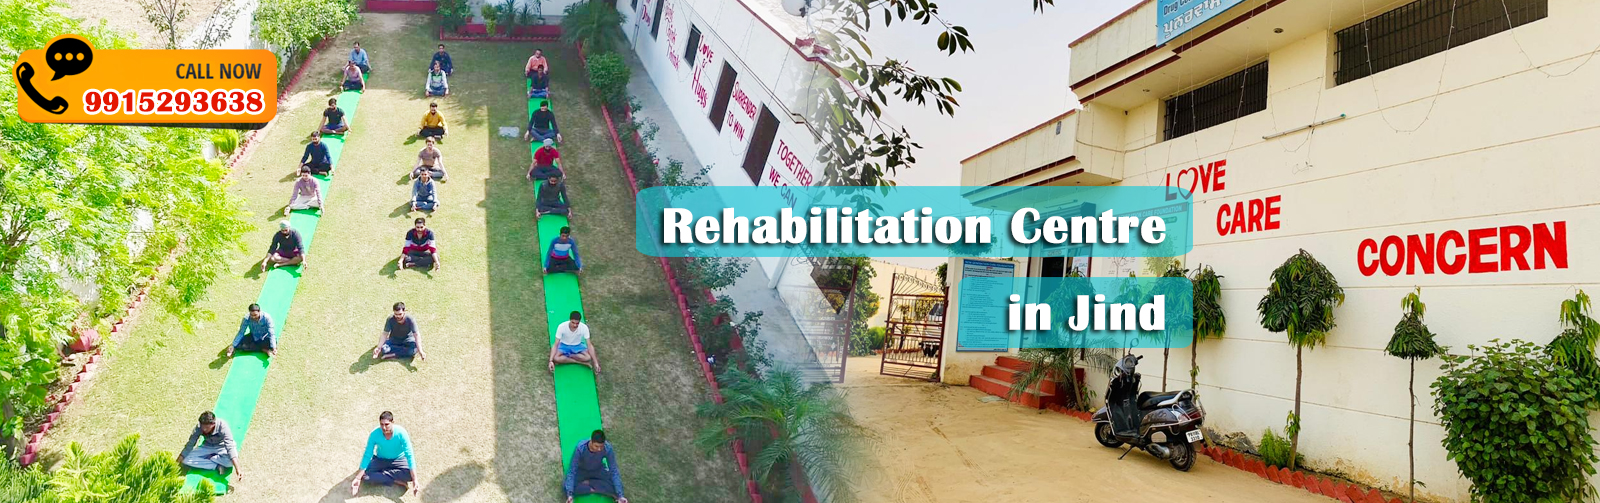 Rehabilitation Centre in Jind